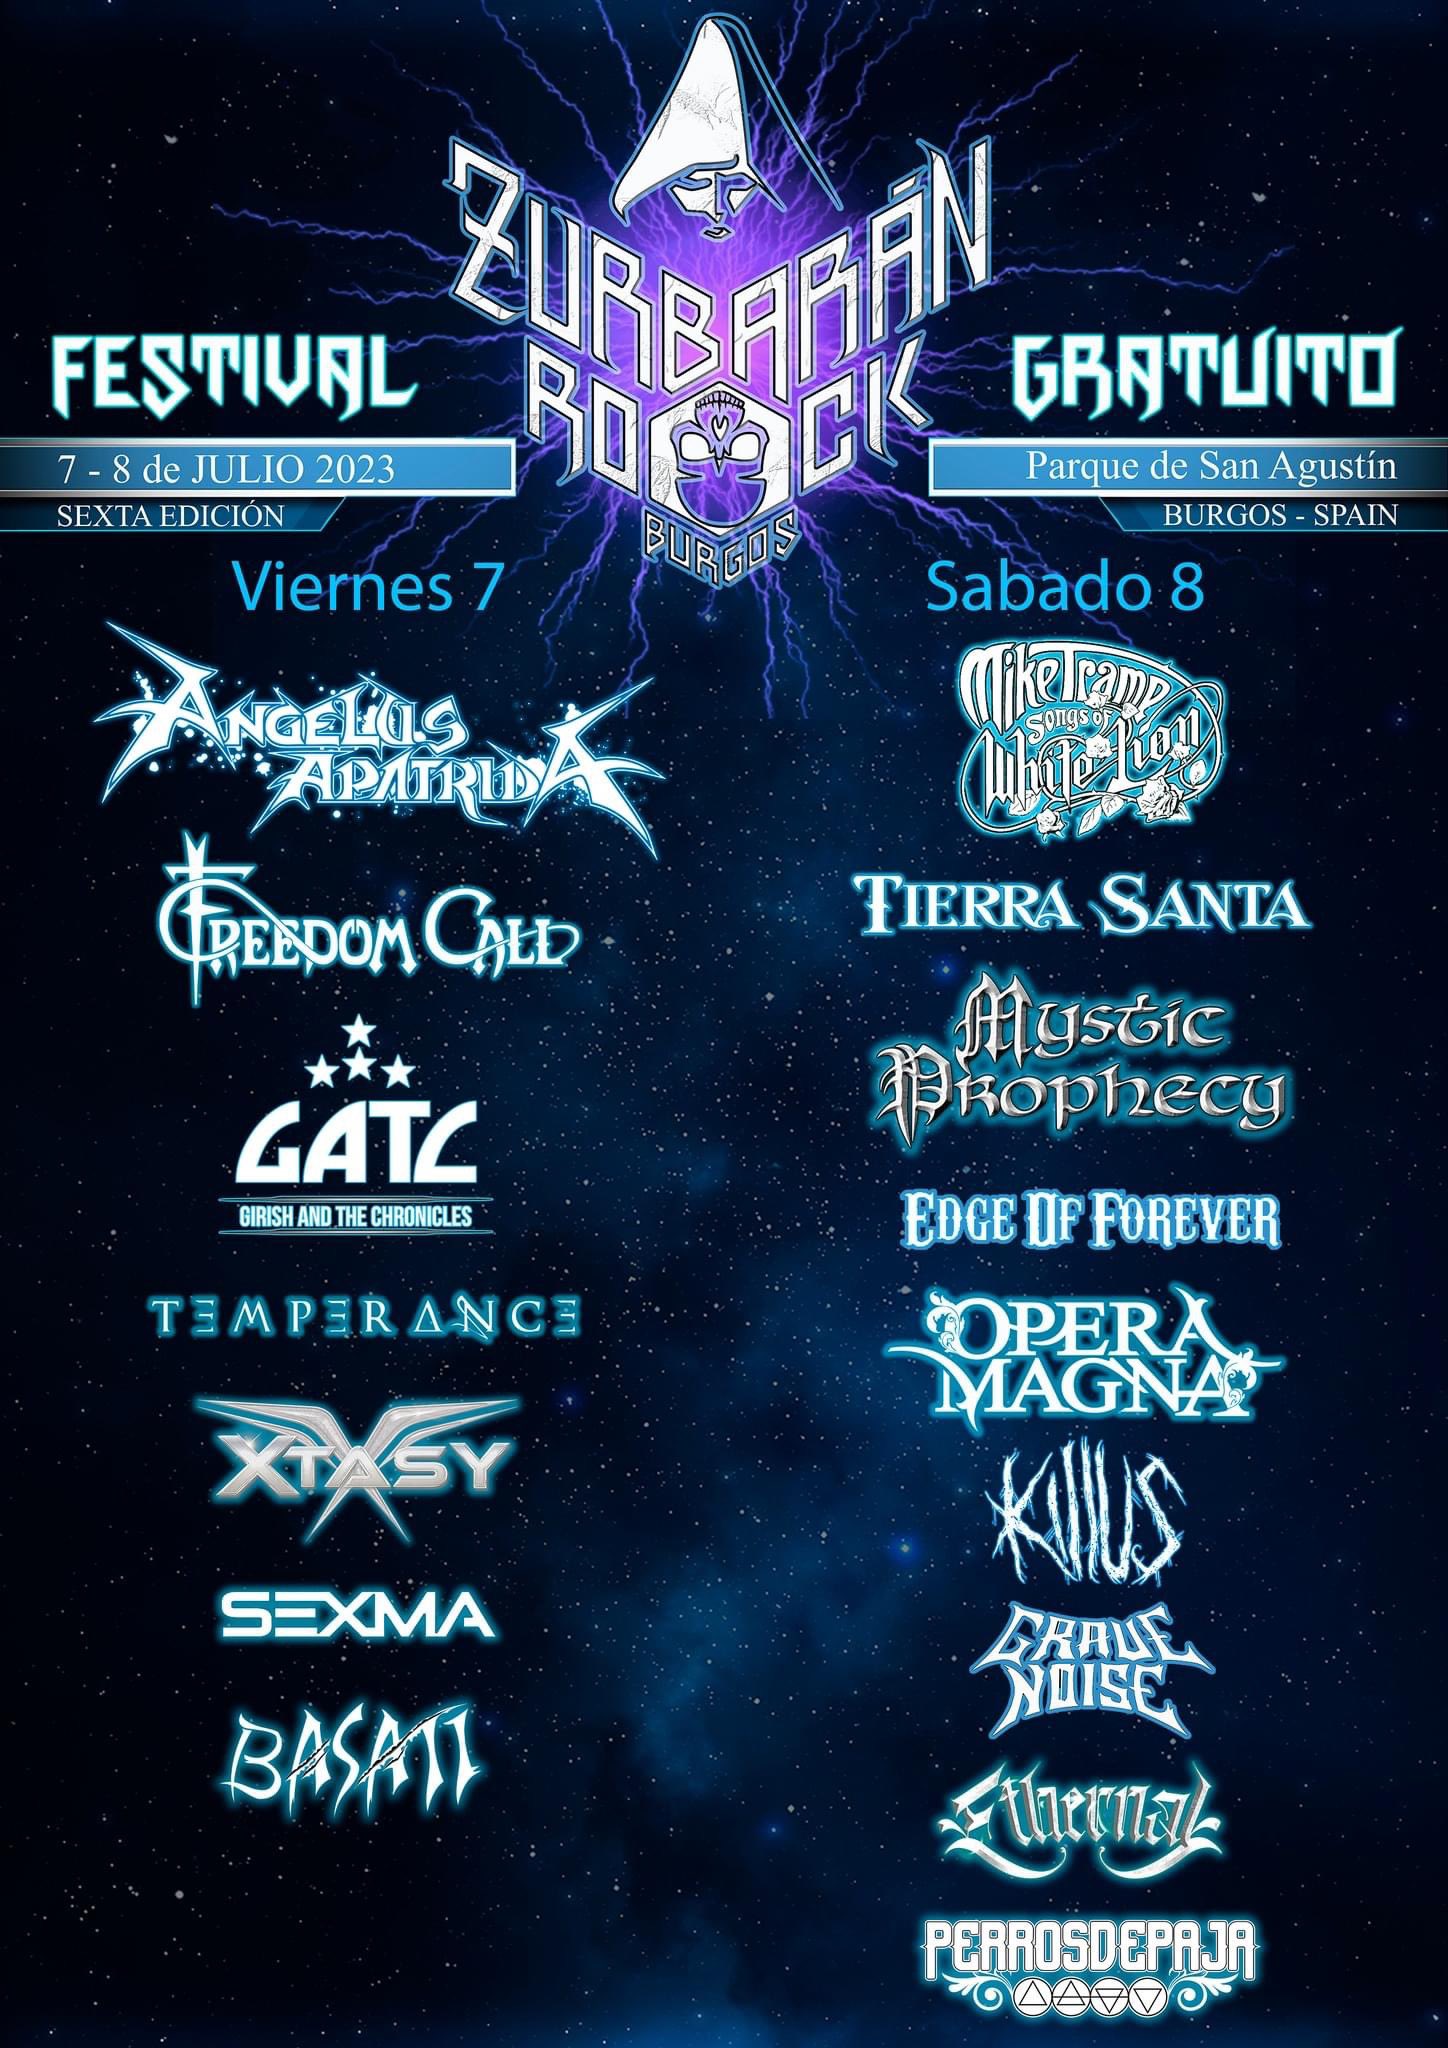 Festivales gratuitos en España - Página 3 FtgZMHyWAAIlSKn?format=jpg&name=large